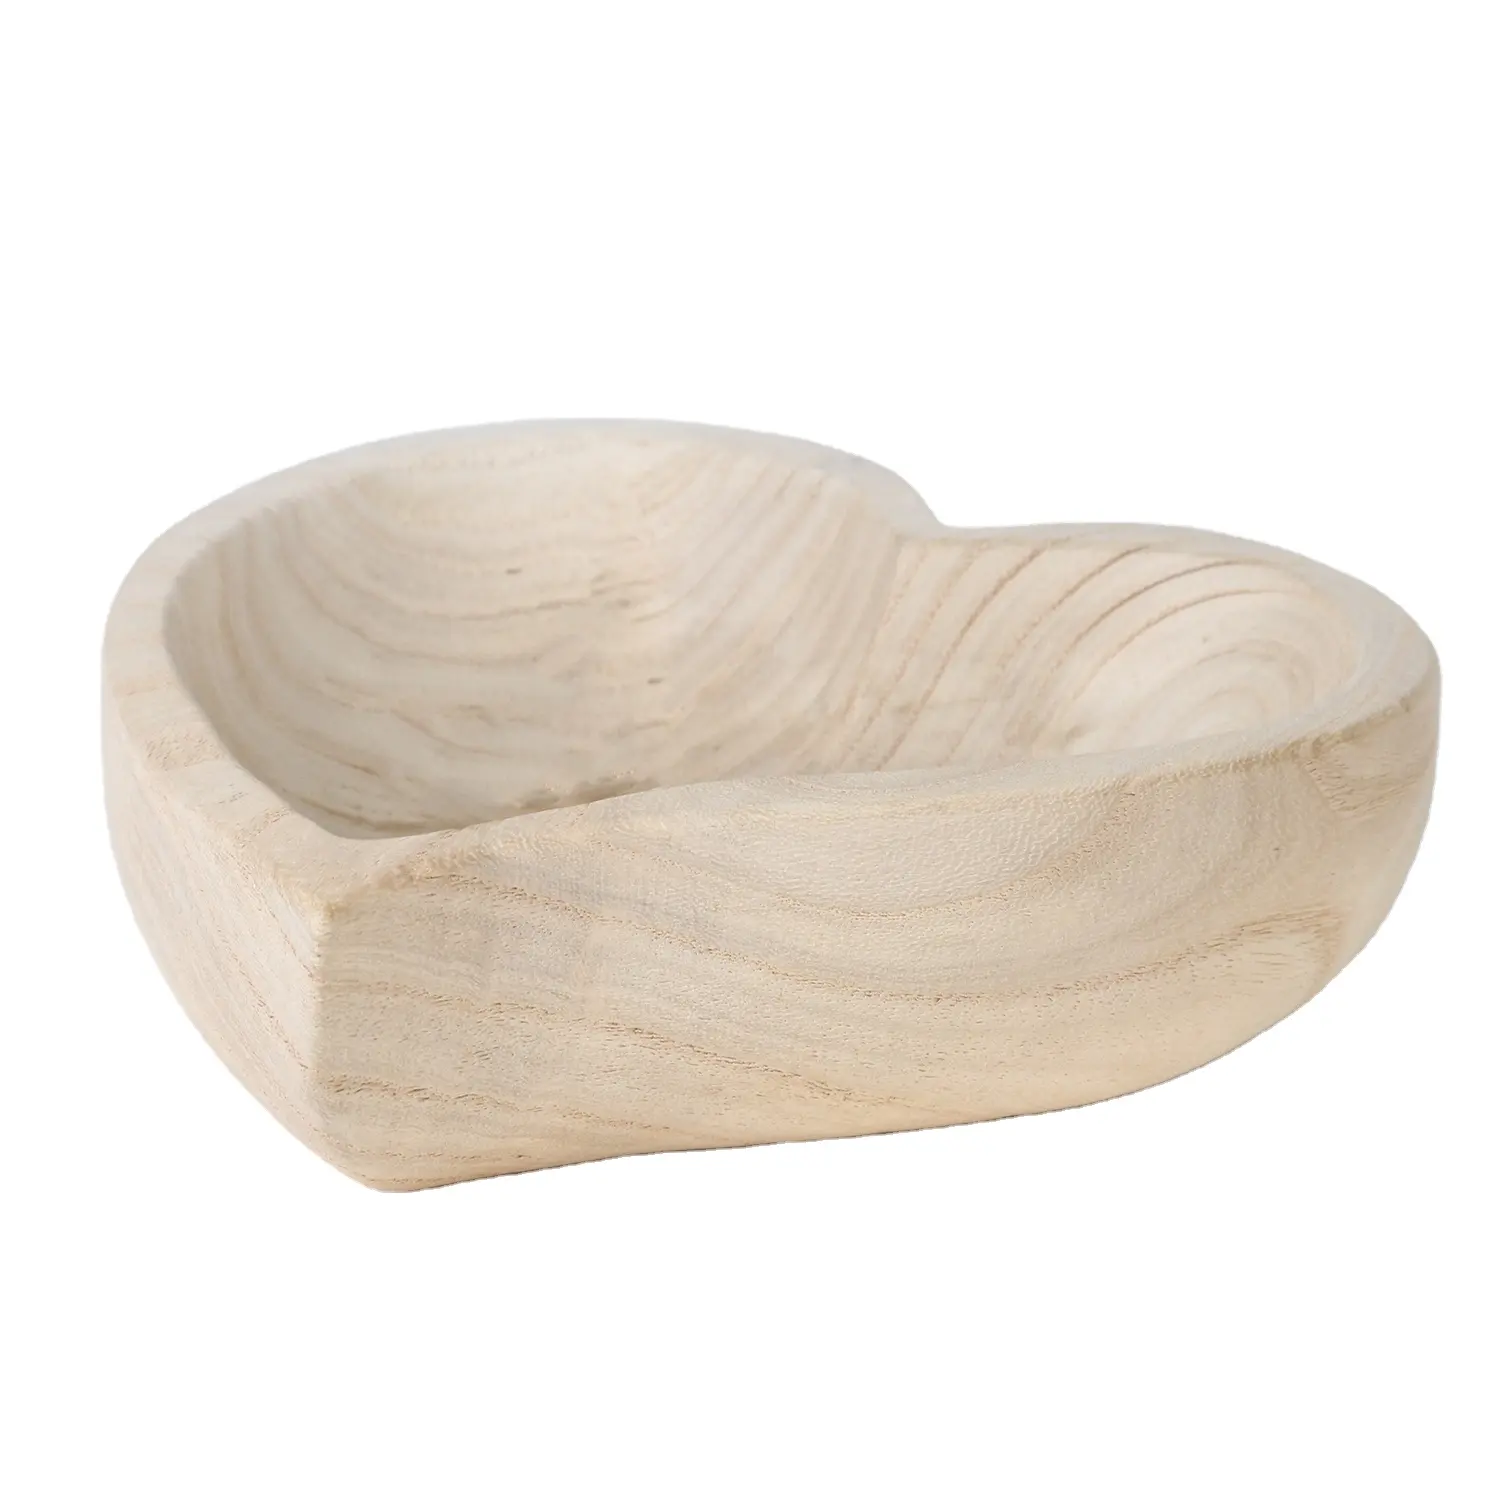 Heart plate of natural wood Heart Shape Wooden Bread Bowl Rustic Dough Bowls Farmhouse Decor